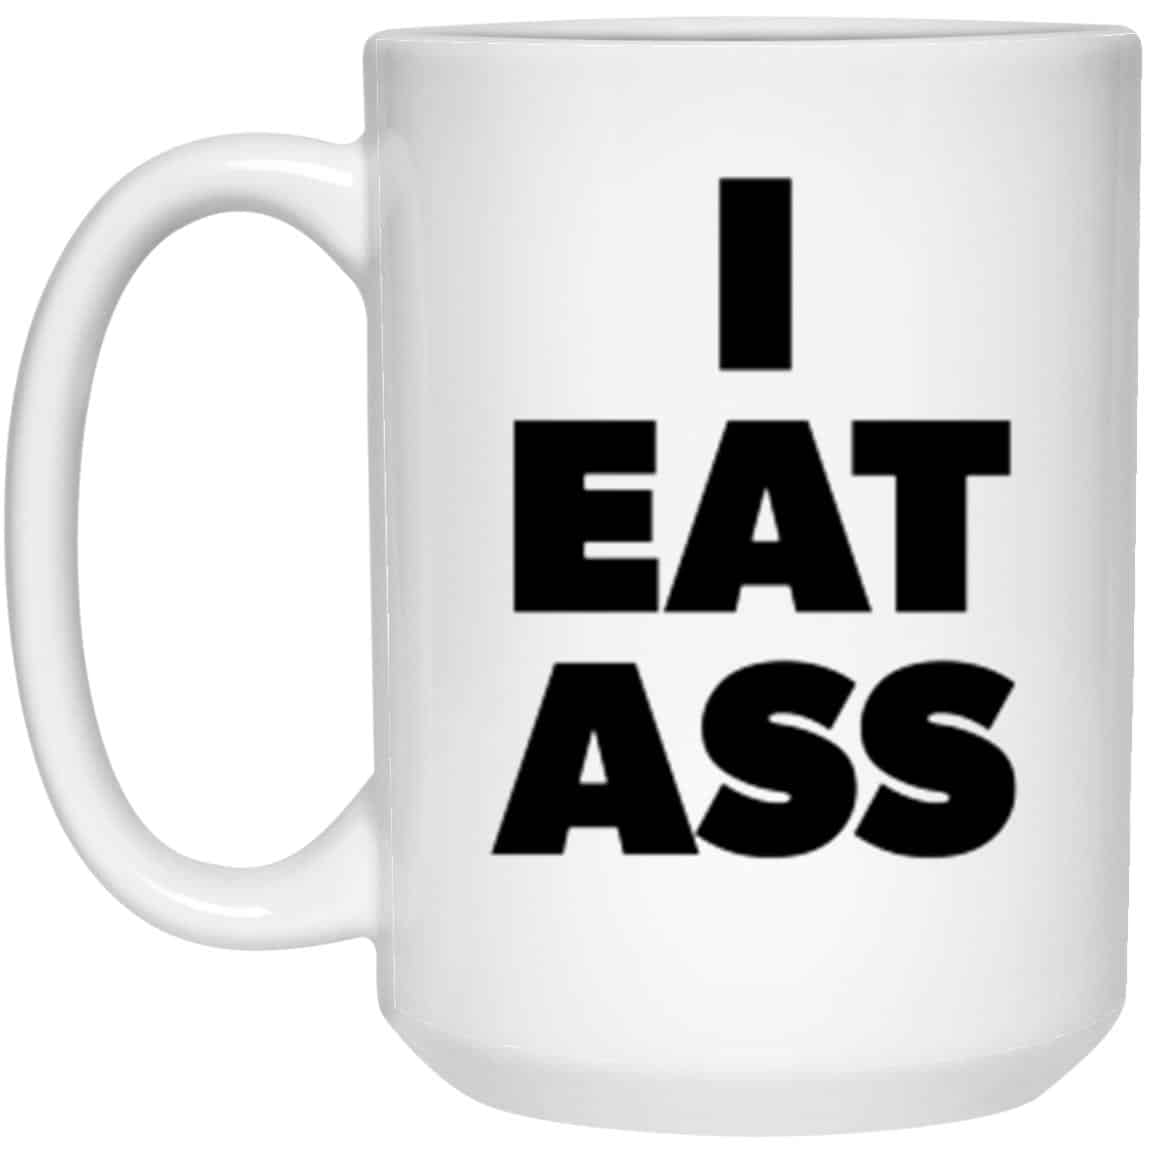 Large white "I Eat Ass" coffee mug